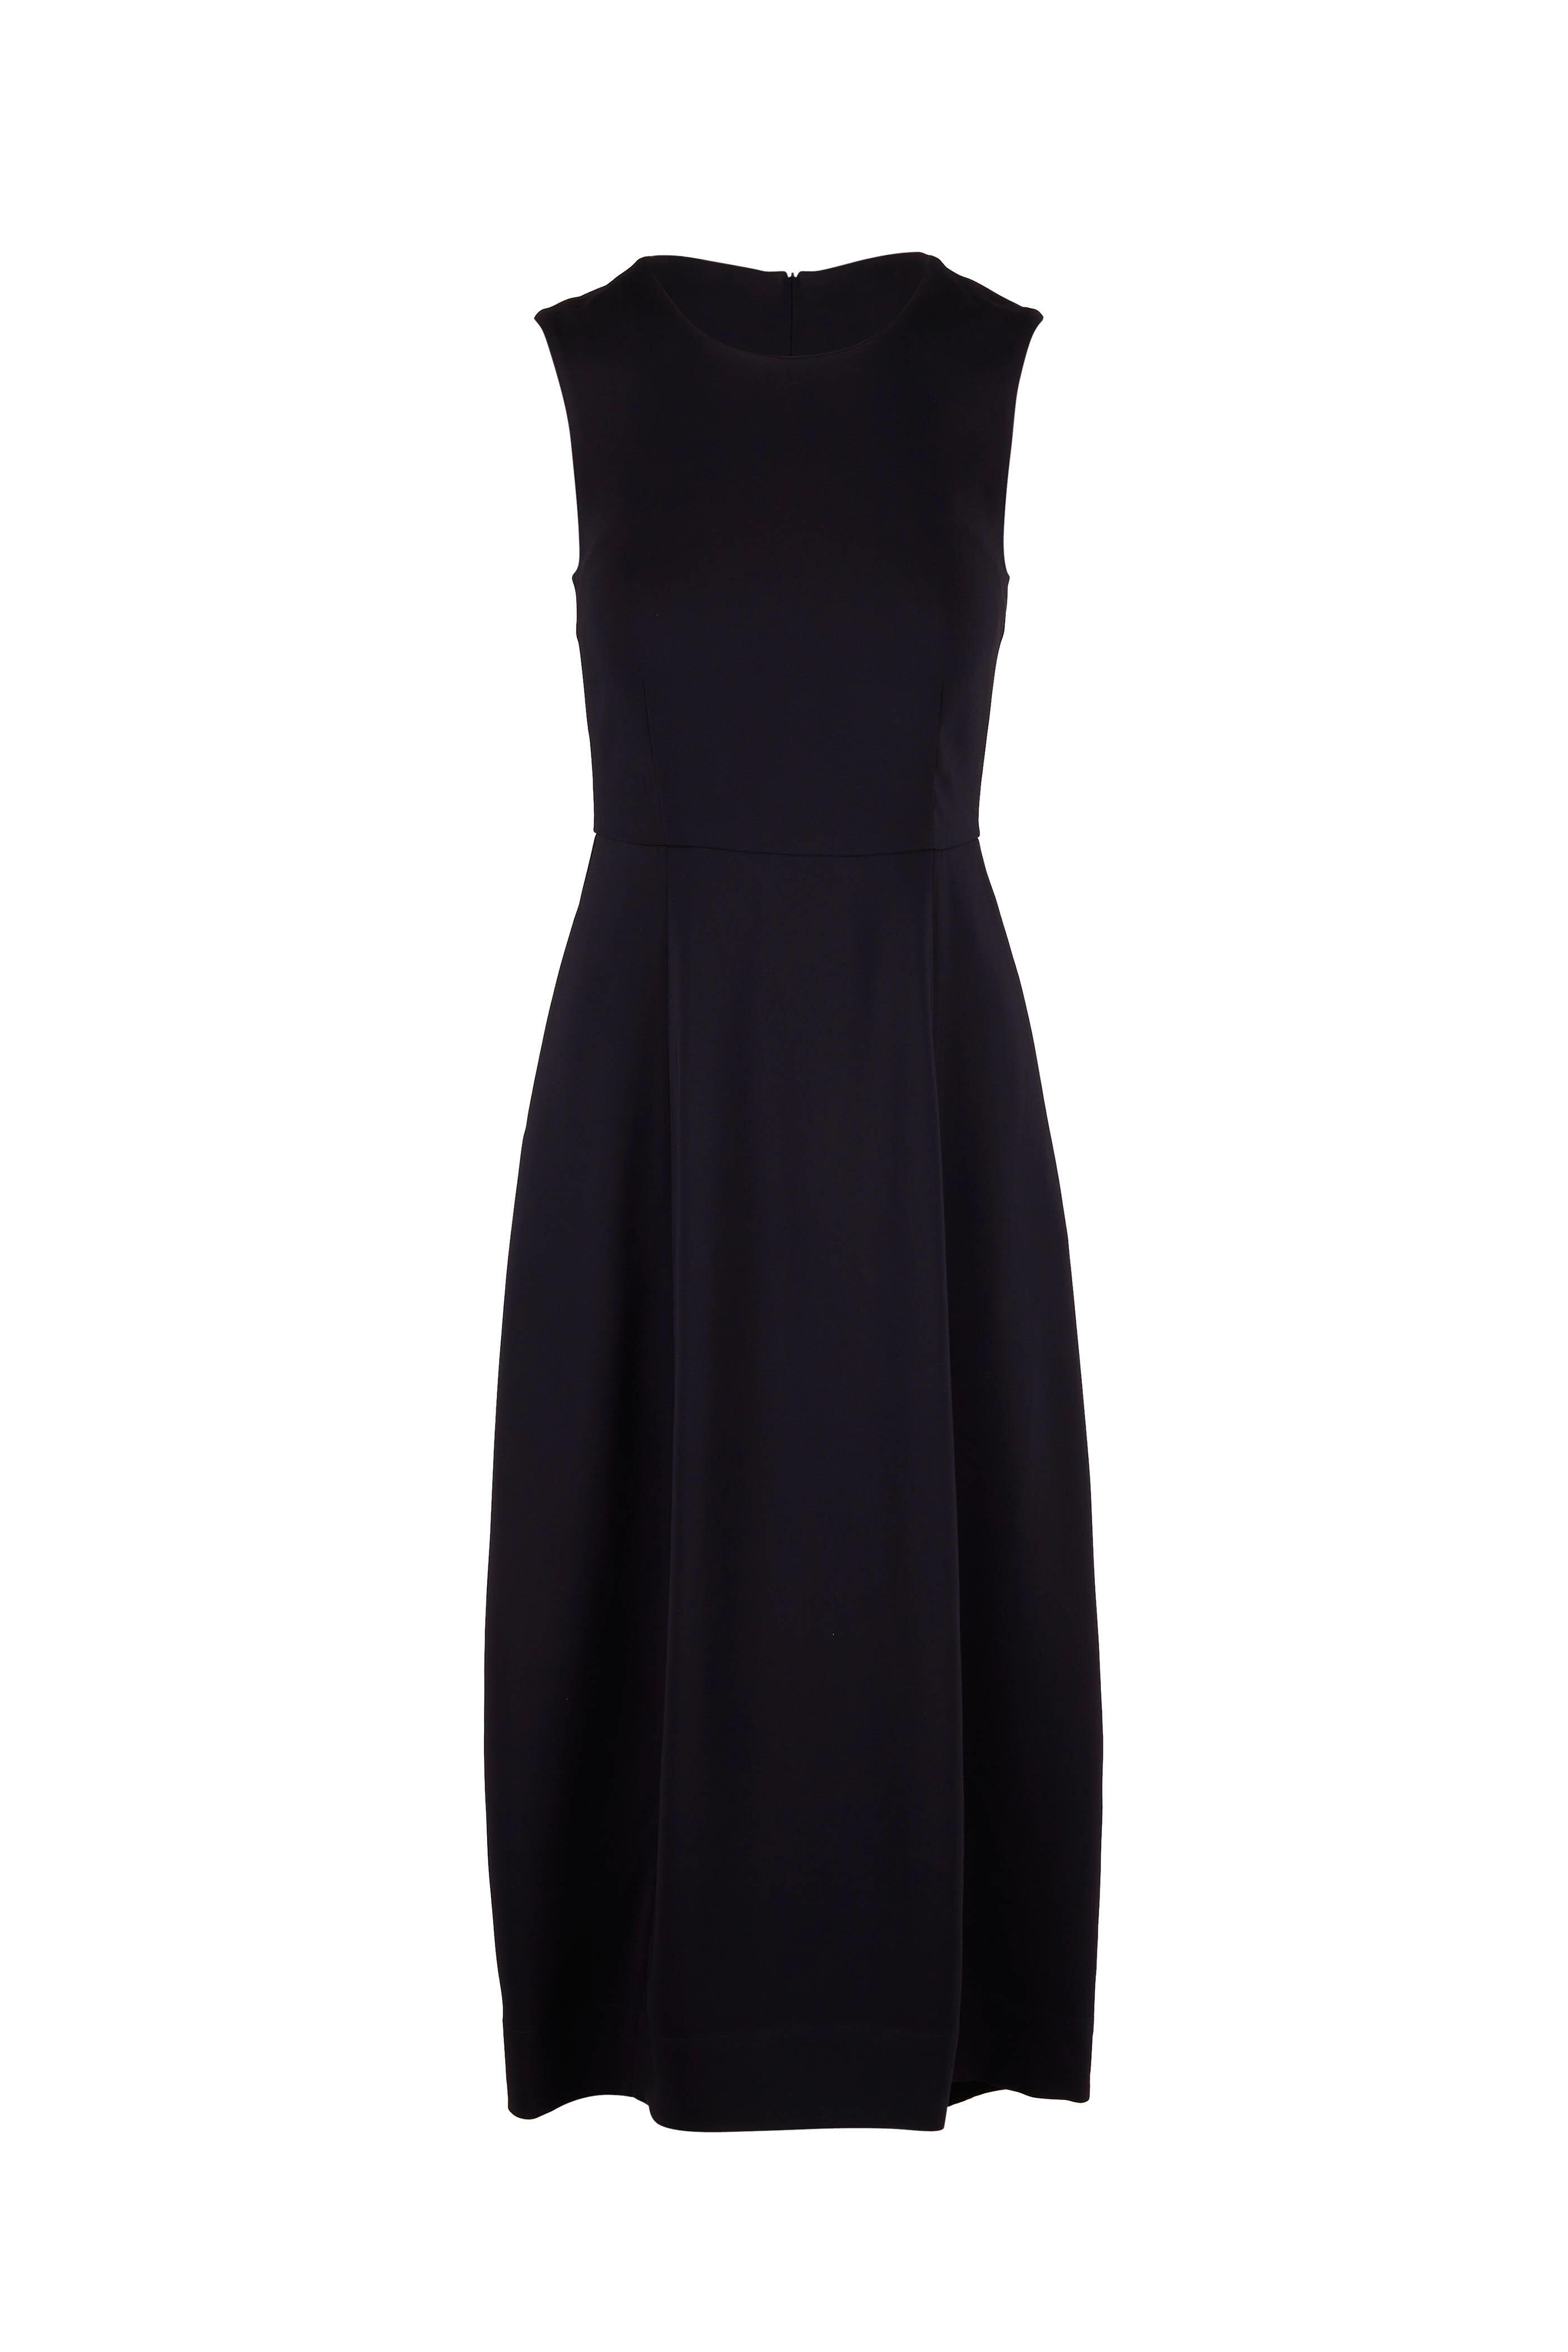 CO Collection - Essentials Black Sleeveless Midi Dress